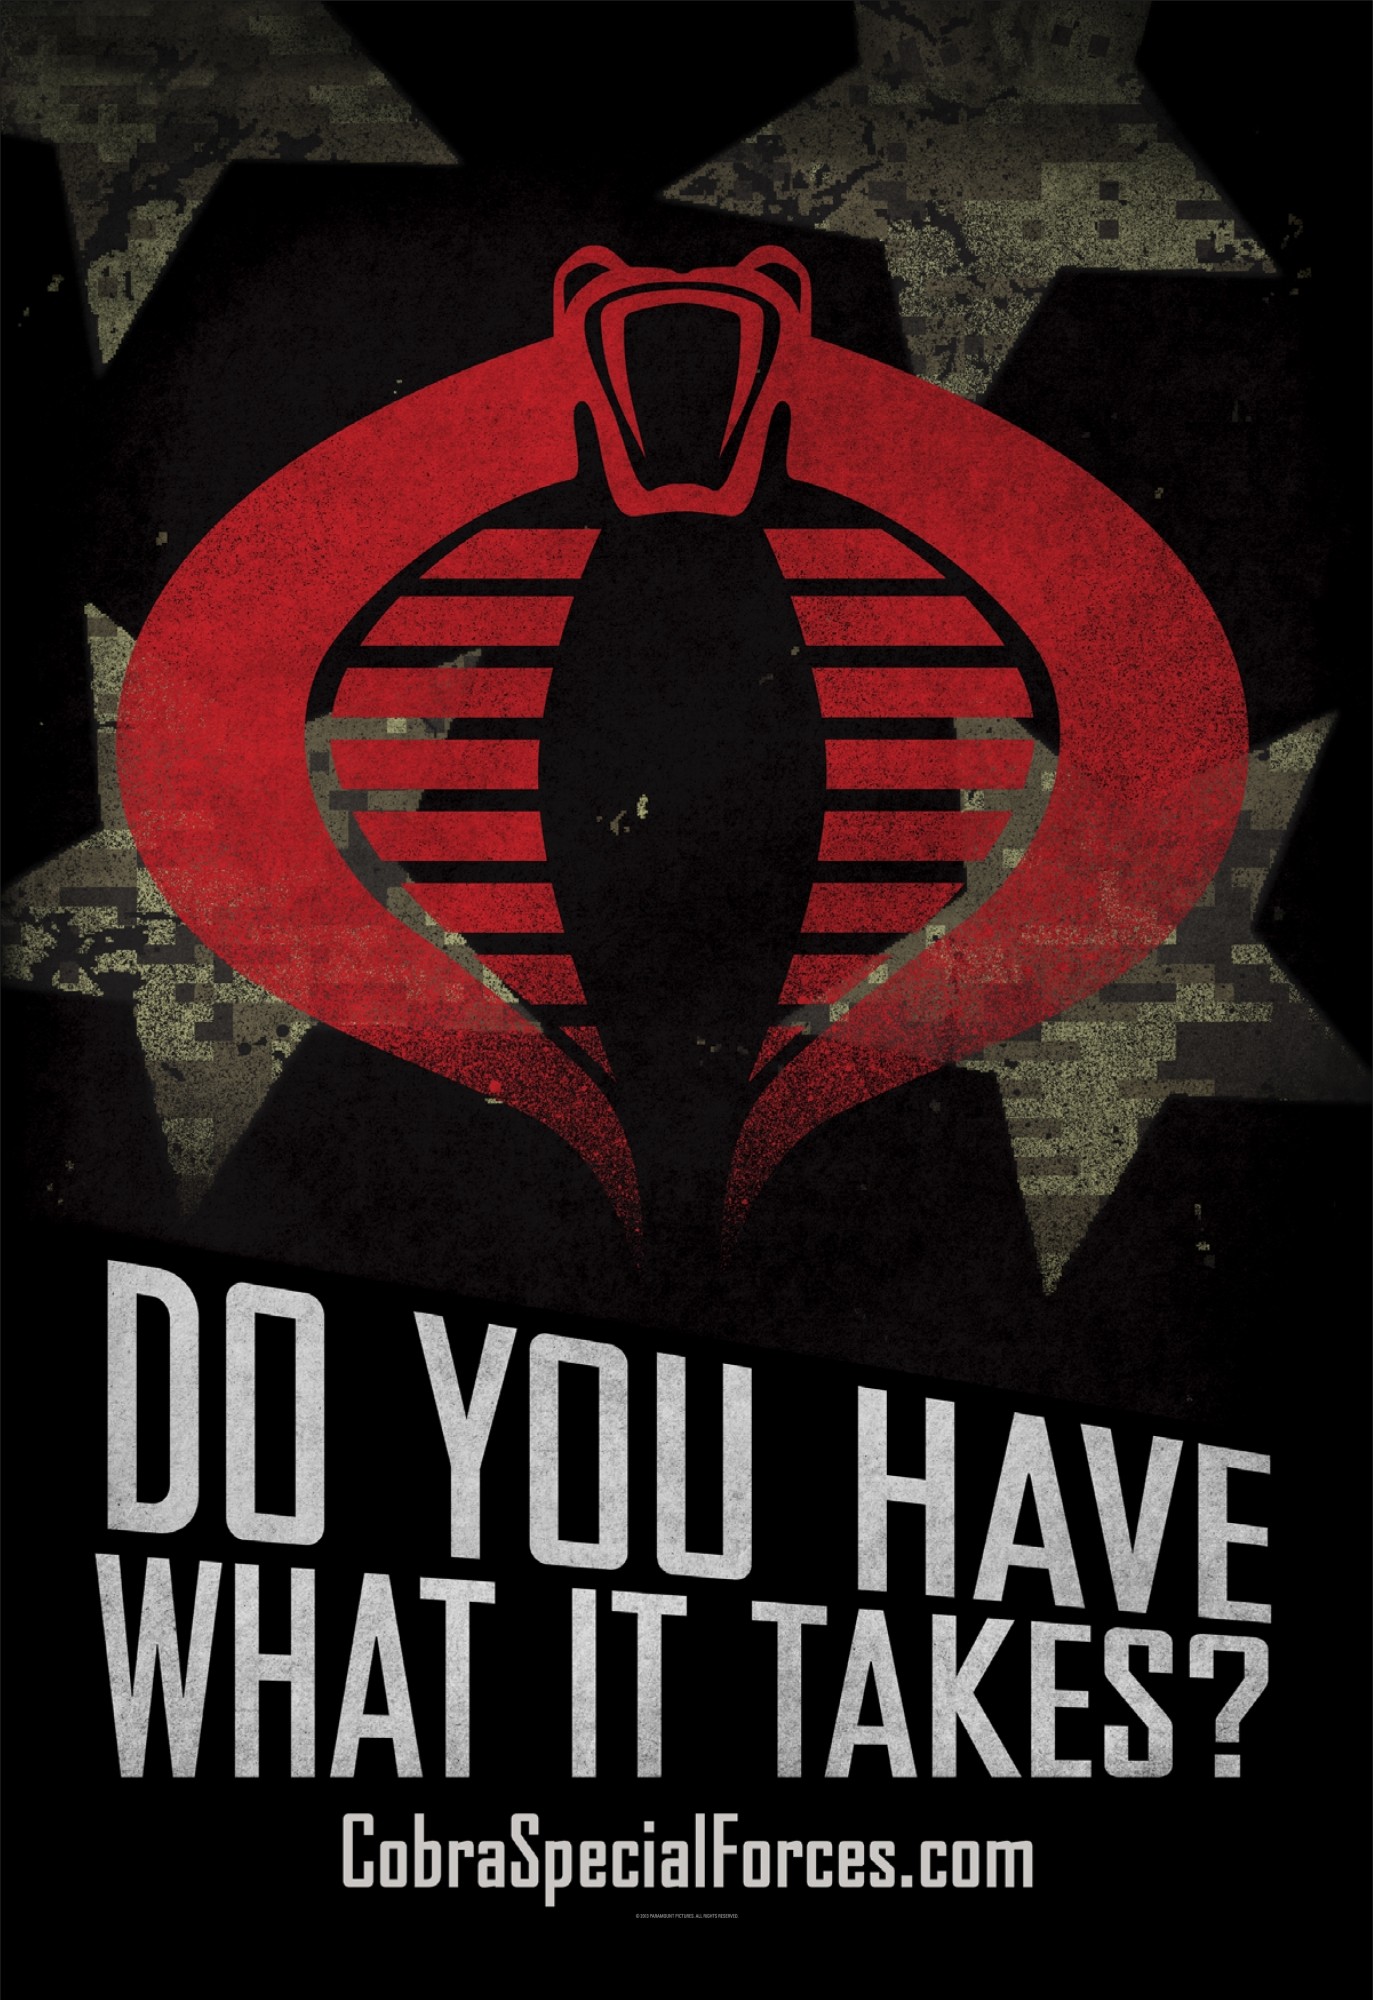 Poster of Paramount Pictures' G.I. Joe: Retaliation (2013)